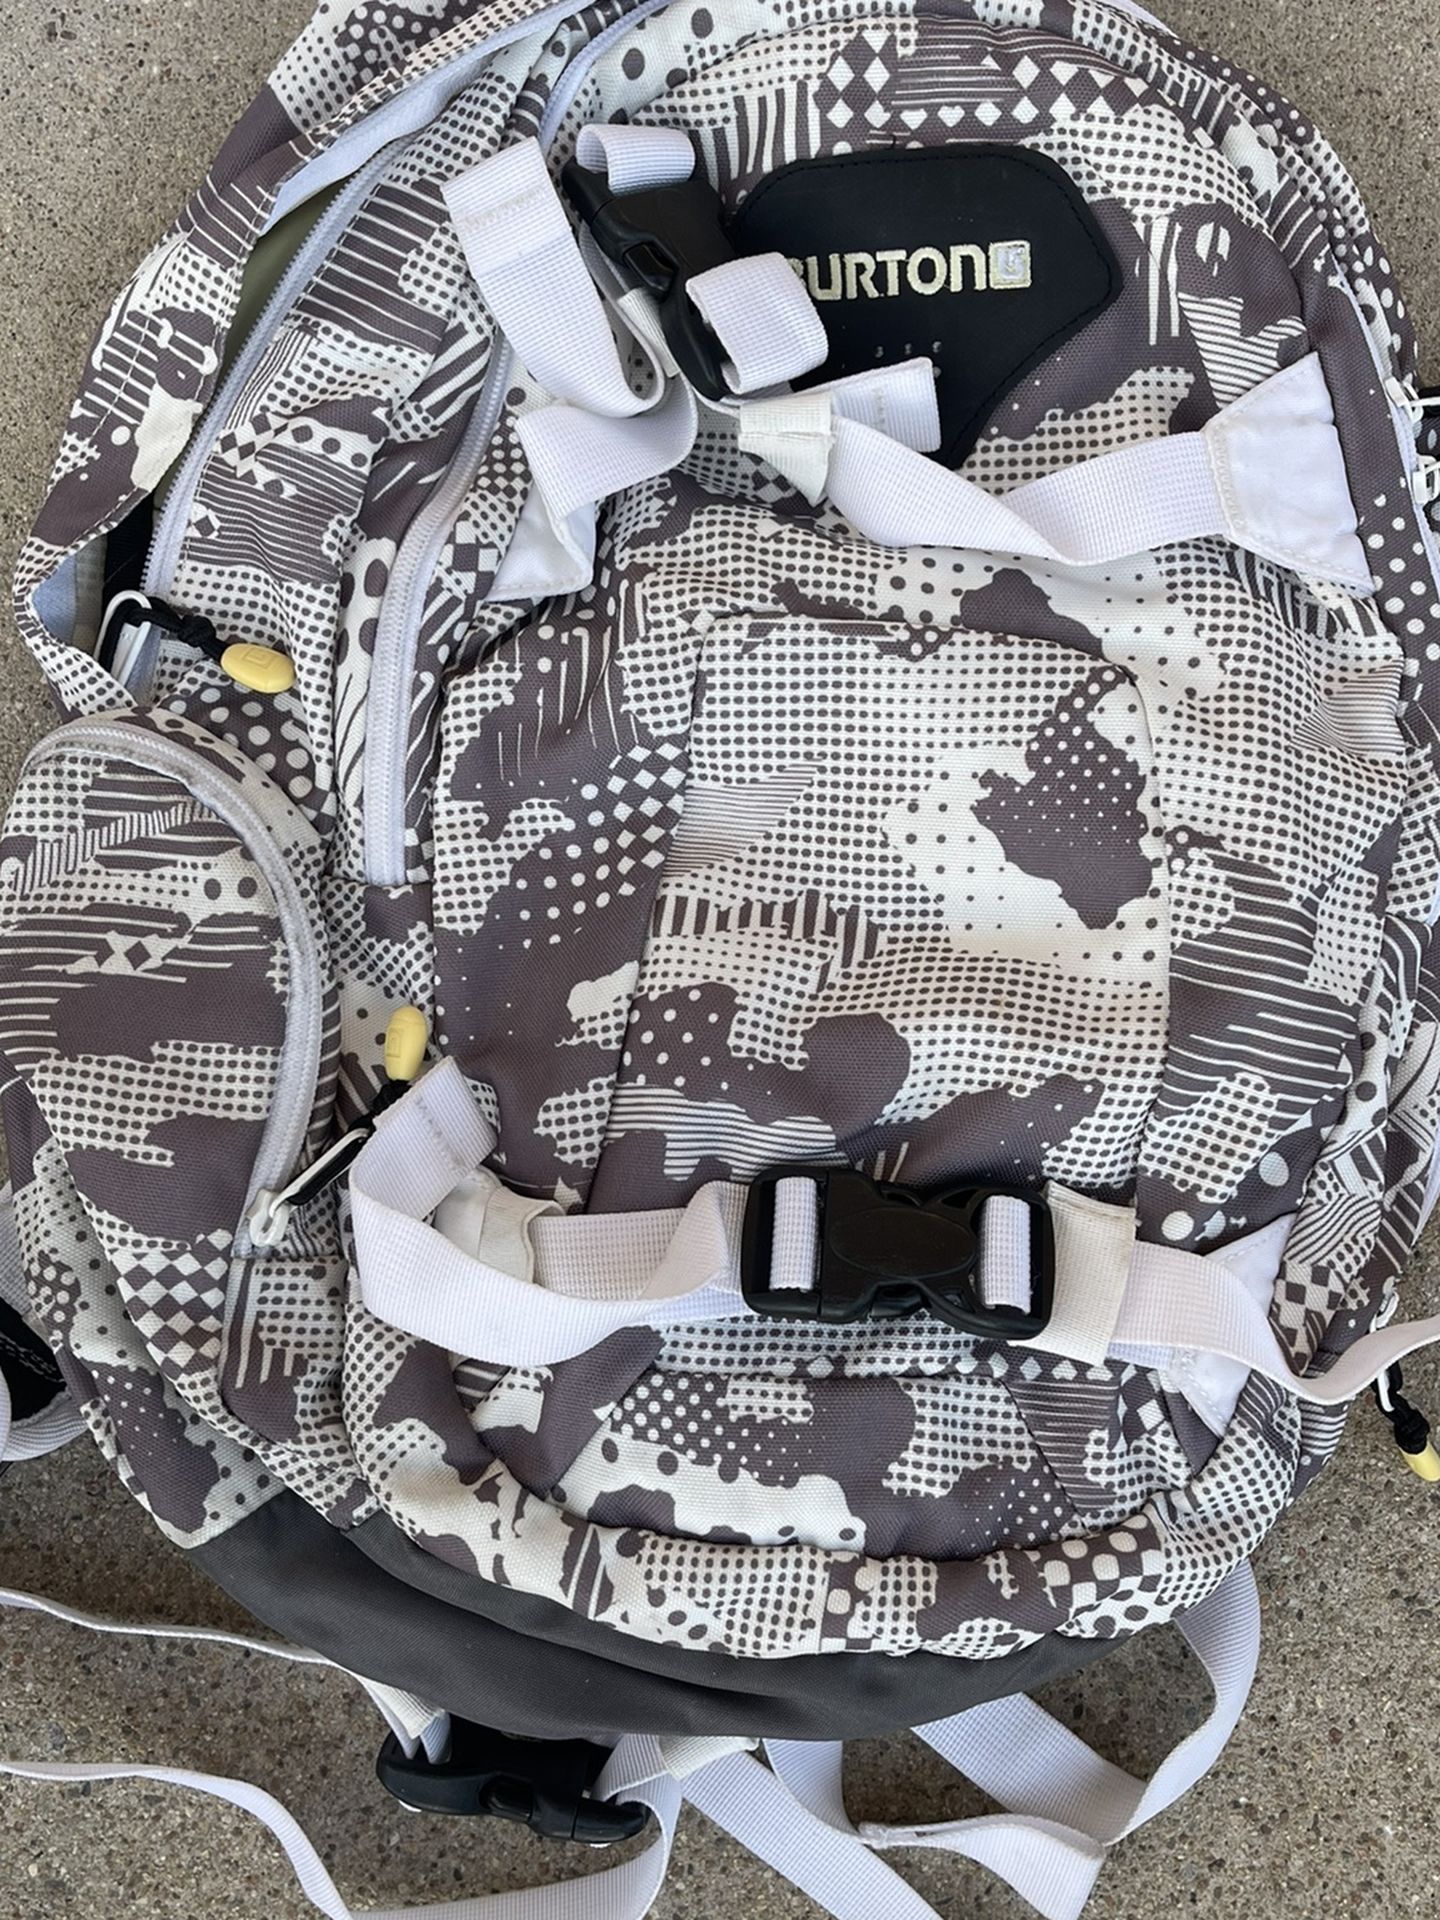 Burton Snowboarding Bag pack